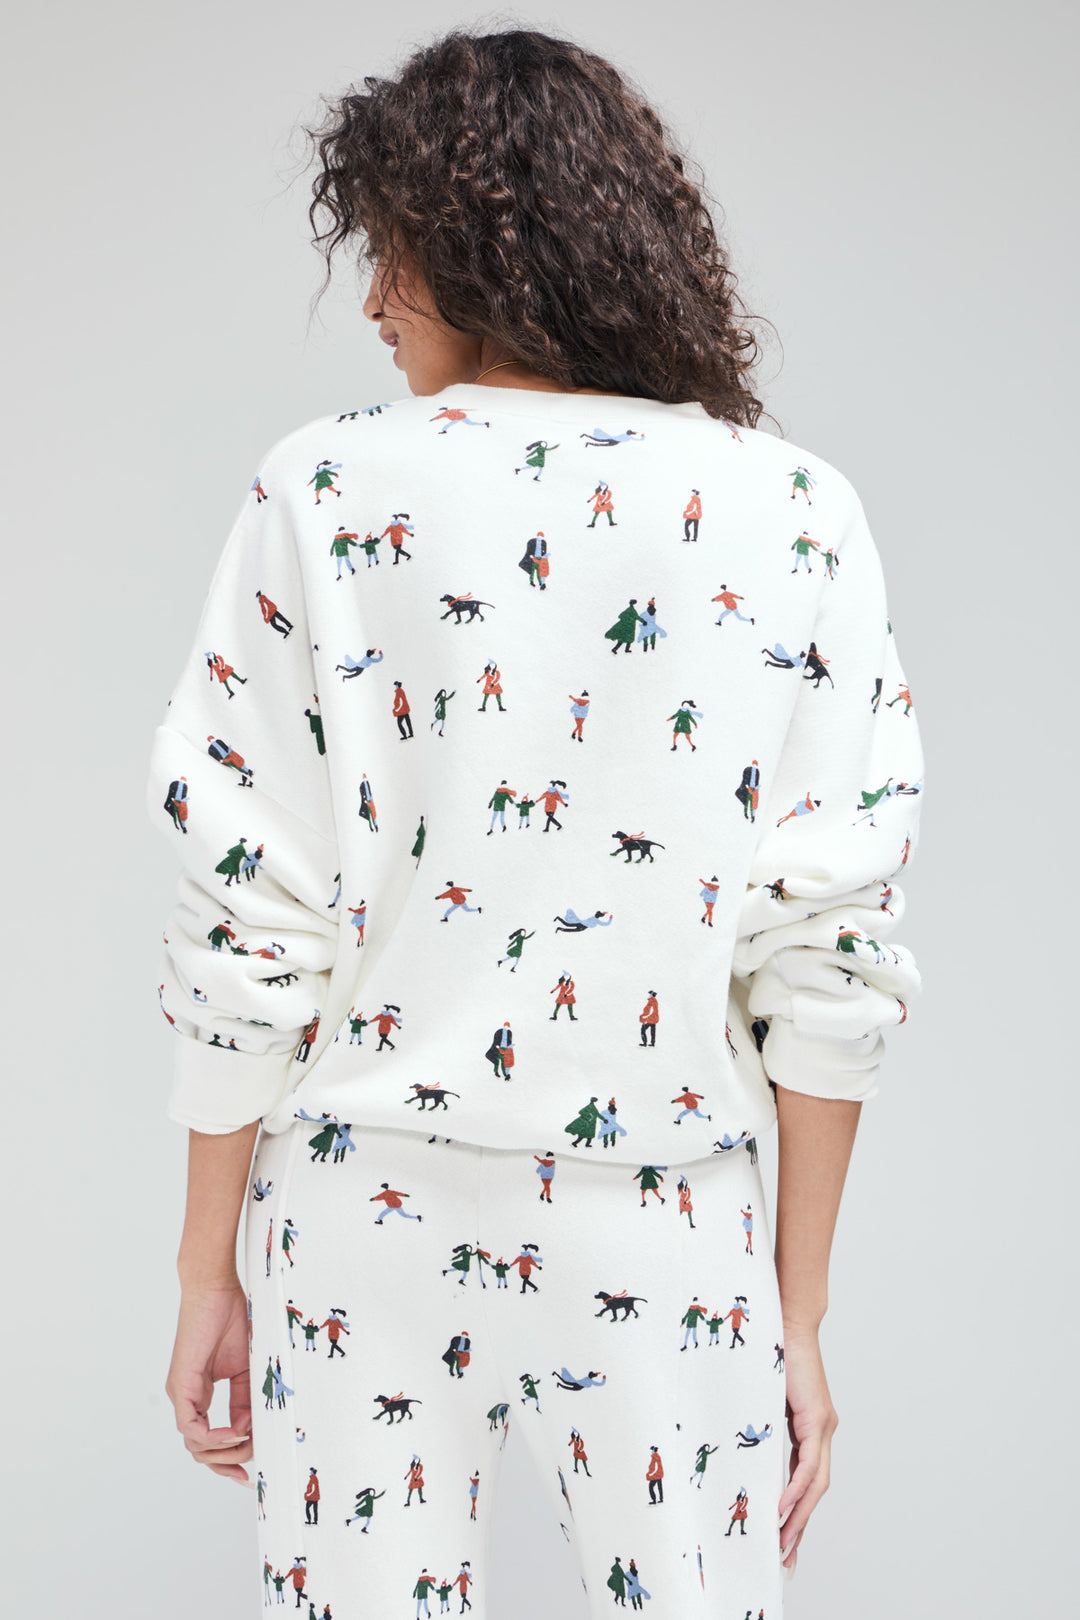 Wildfox Women's Winter Wonderland Pajama Top